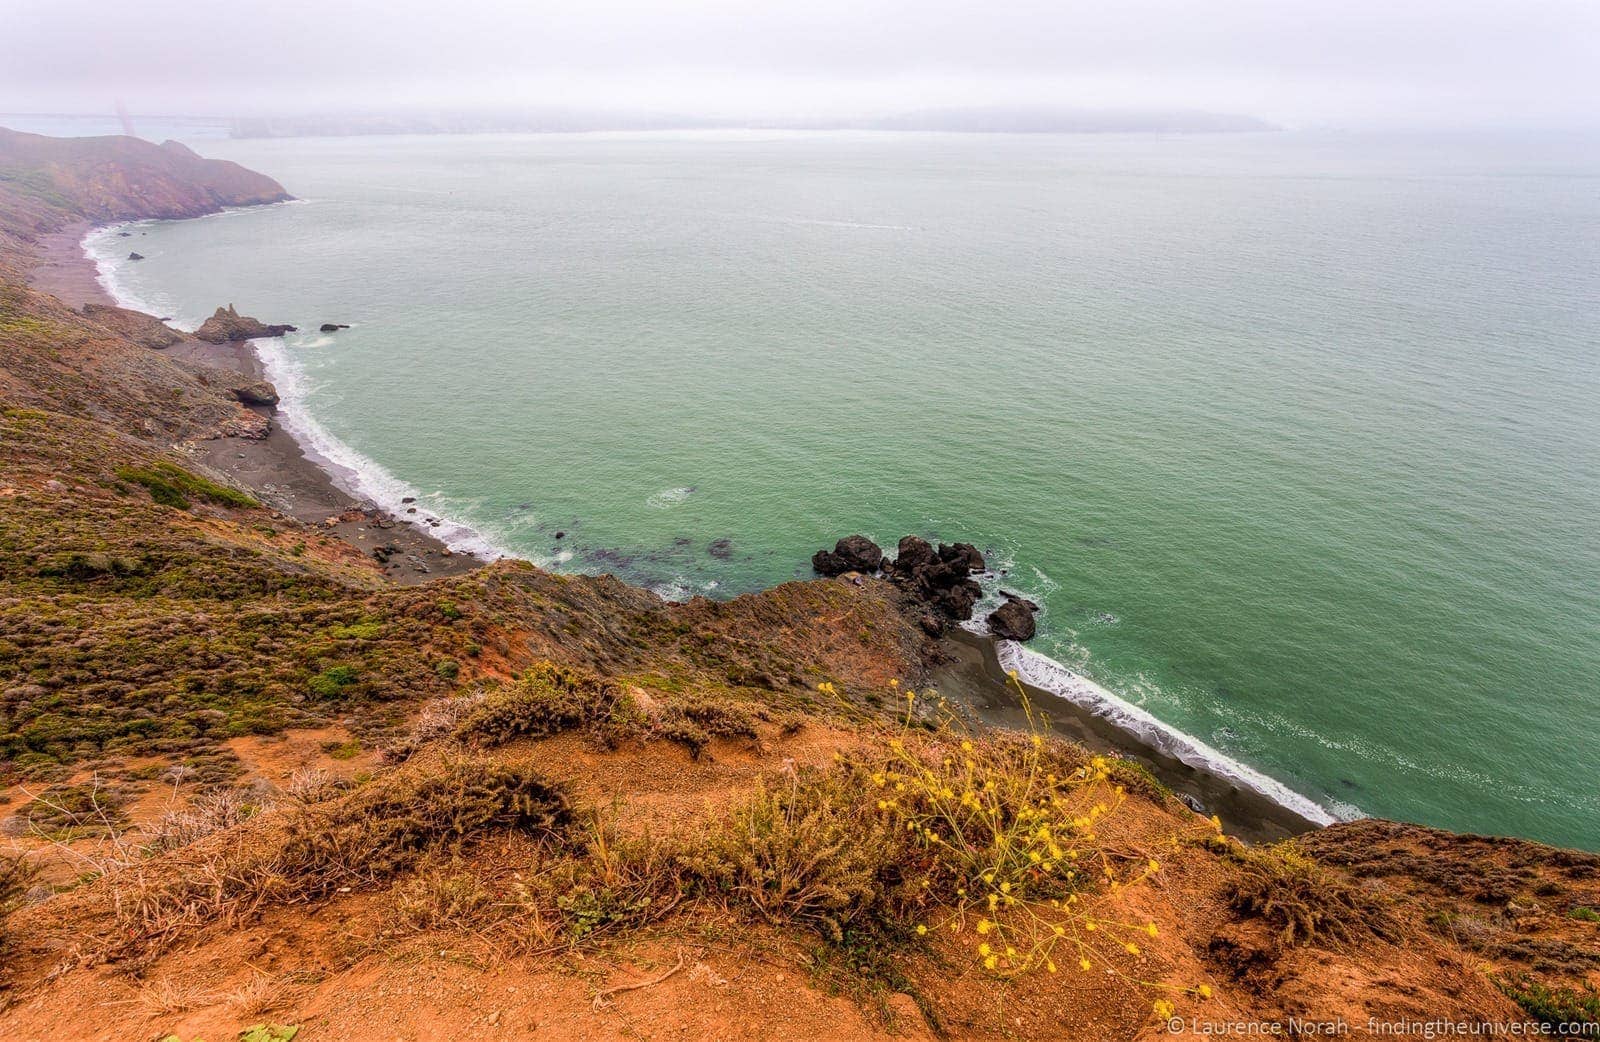 Shooting San Francisco from Bonita Cove and Marin Headlands with VEO